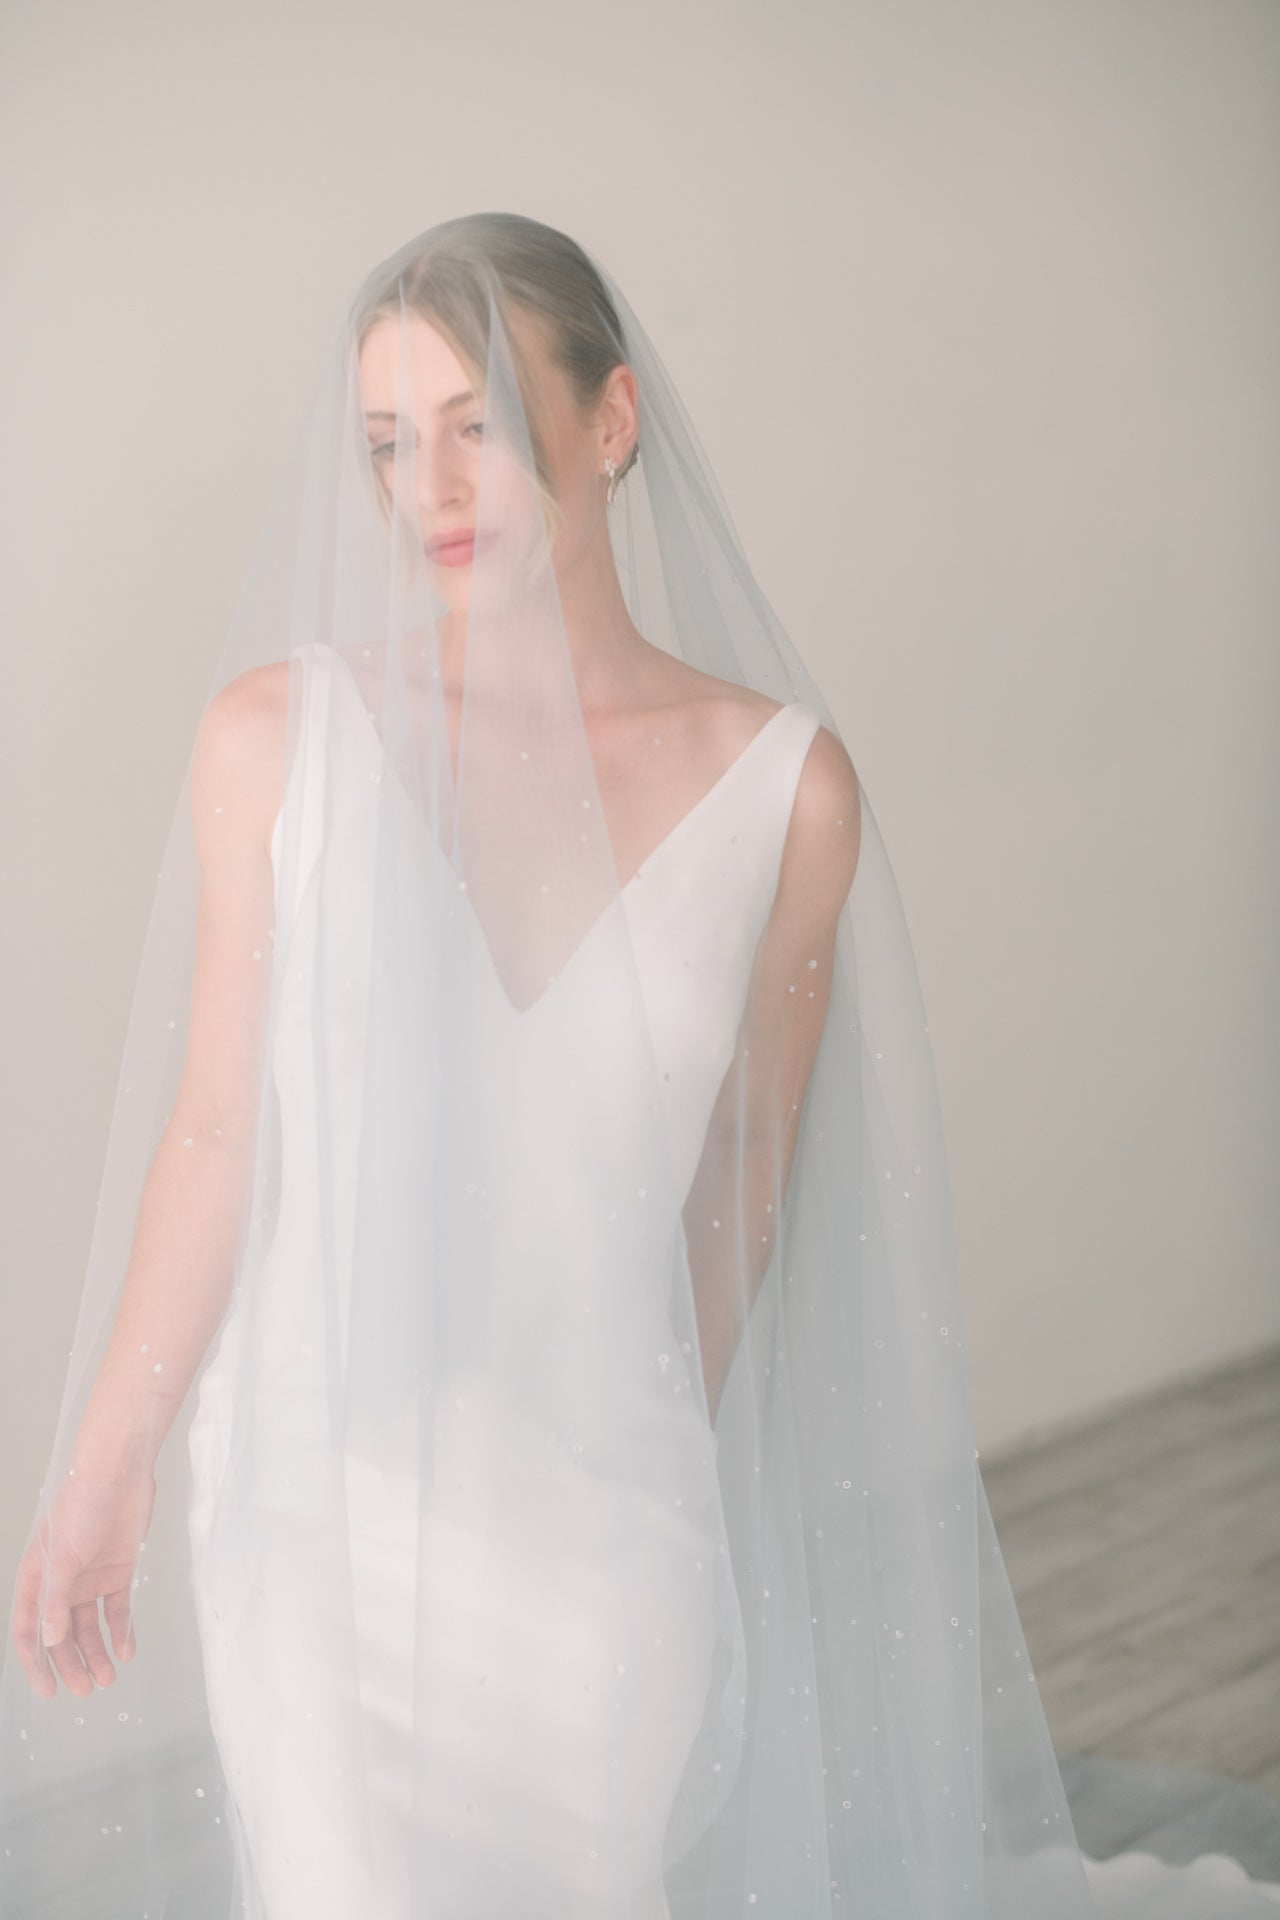 Regal length wedding veils